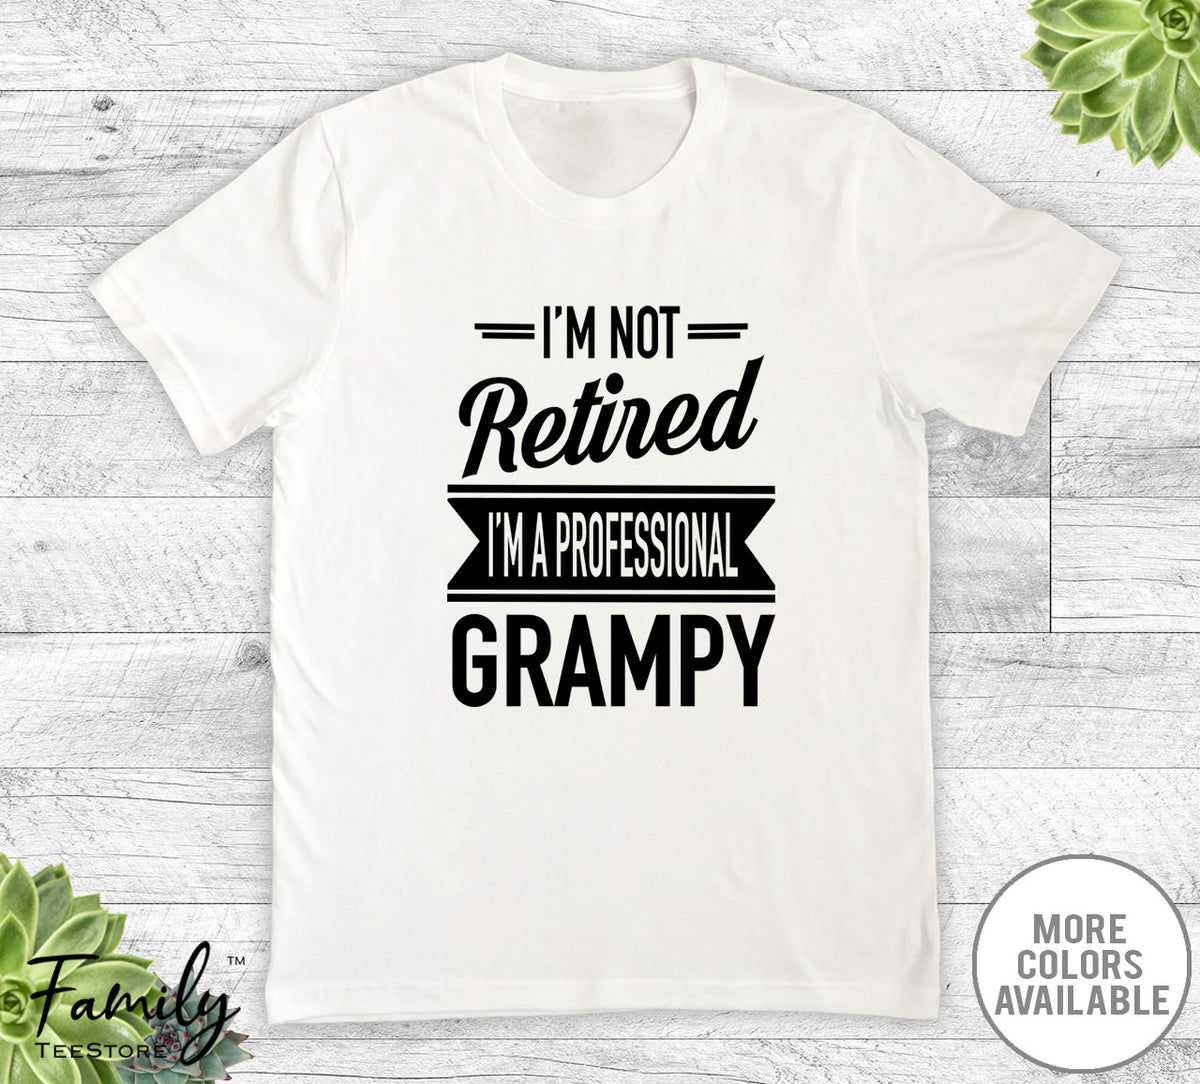 I'm Not Retired I'm A Professional Grampy - Unisex T-shirt - Grampy Shirt - Grampy Gift